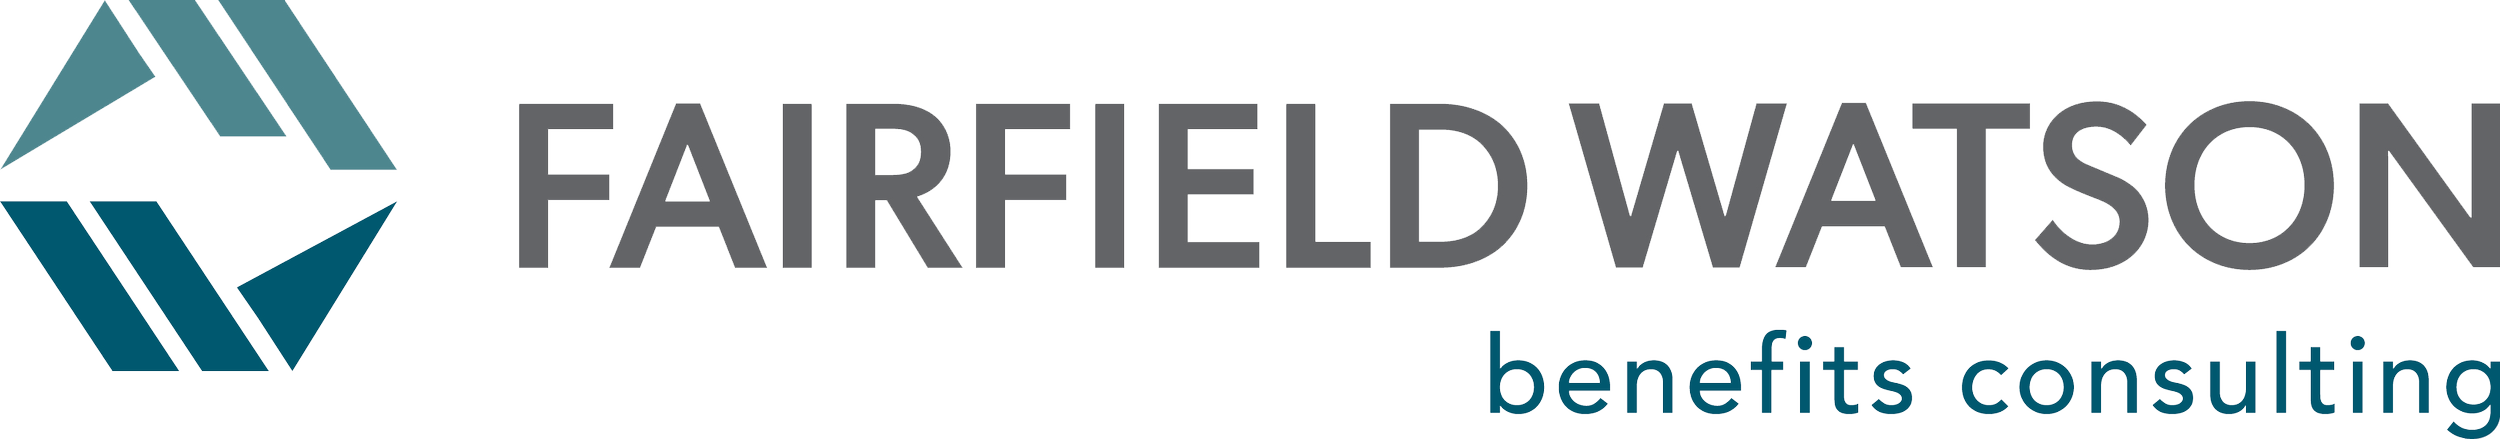 FairfieldWatson-Logo-Lockup3-BenefitsConsulting-CMYK (002).png